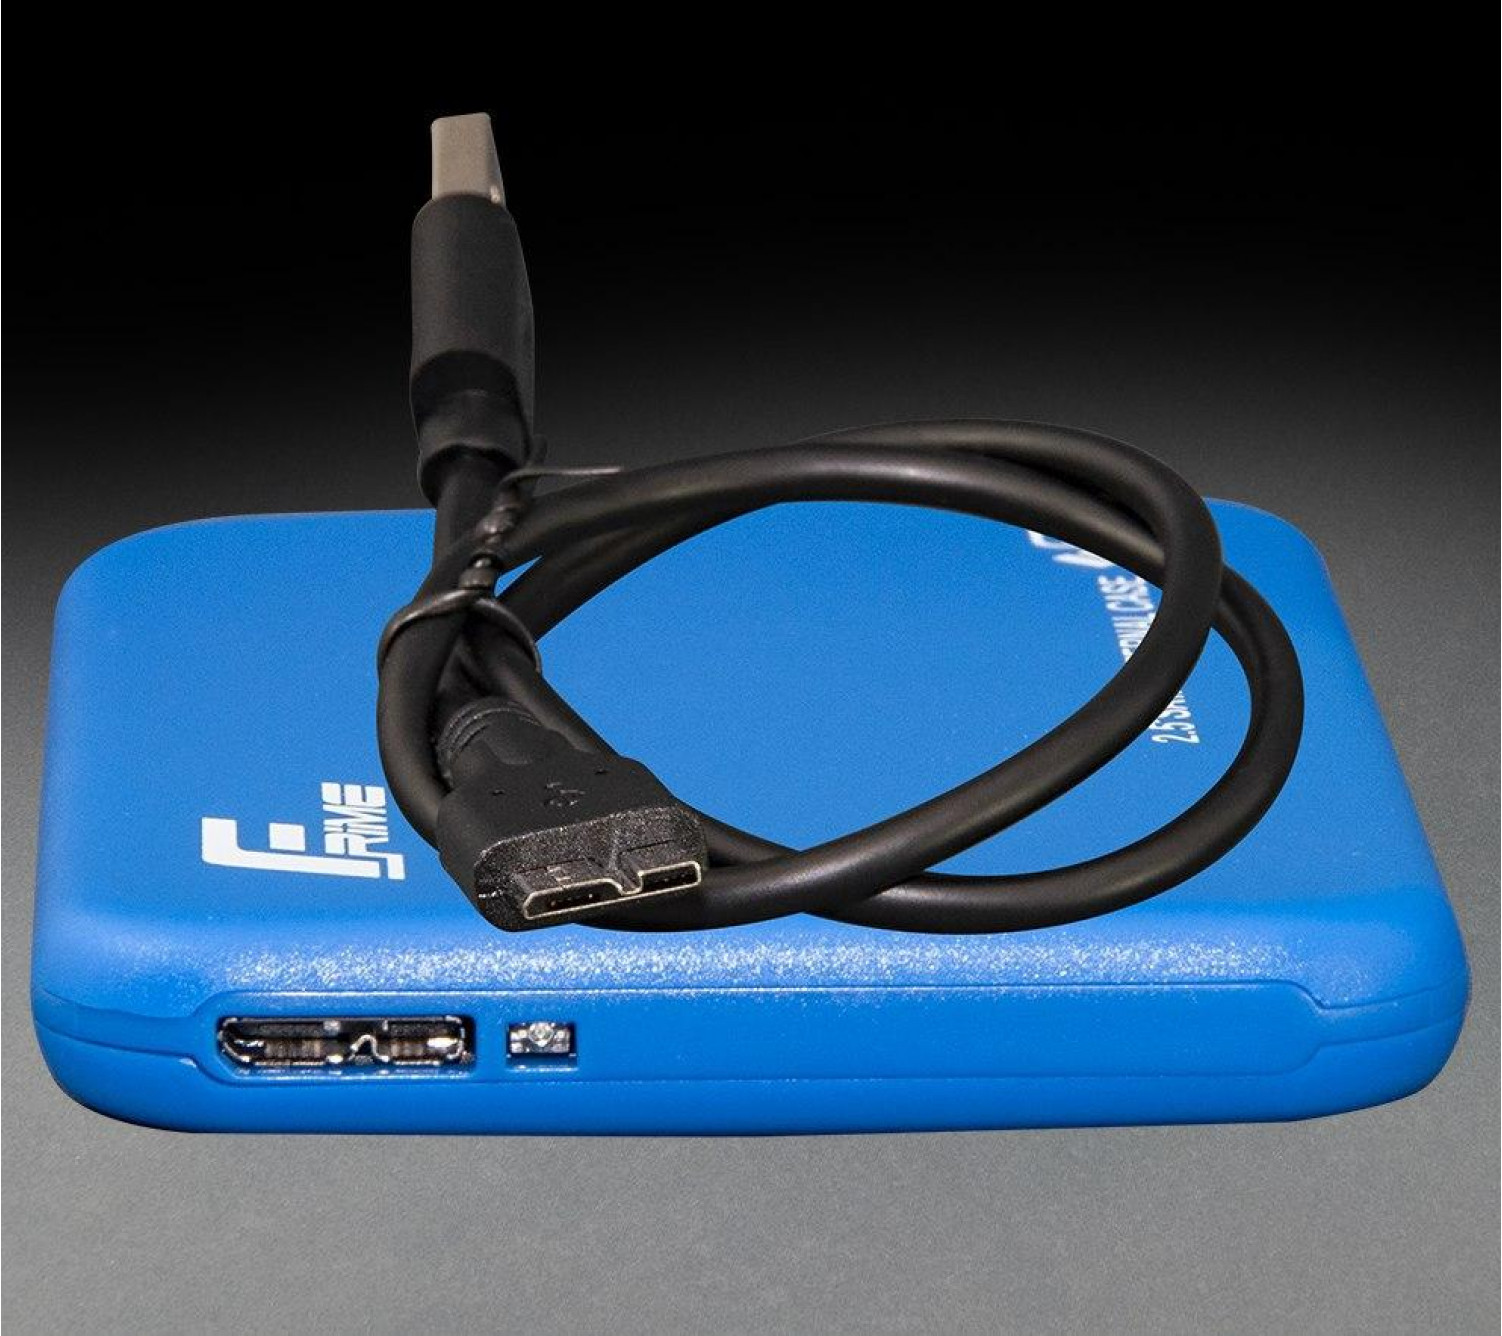 Внешний карман Frime для 2.5 "SATA HDD / SSD Plastic USB 3.0 Blue 